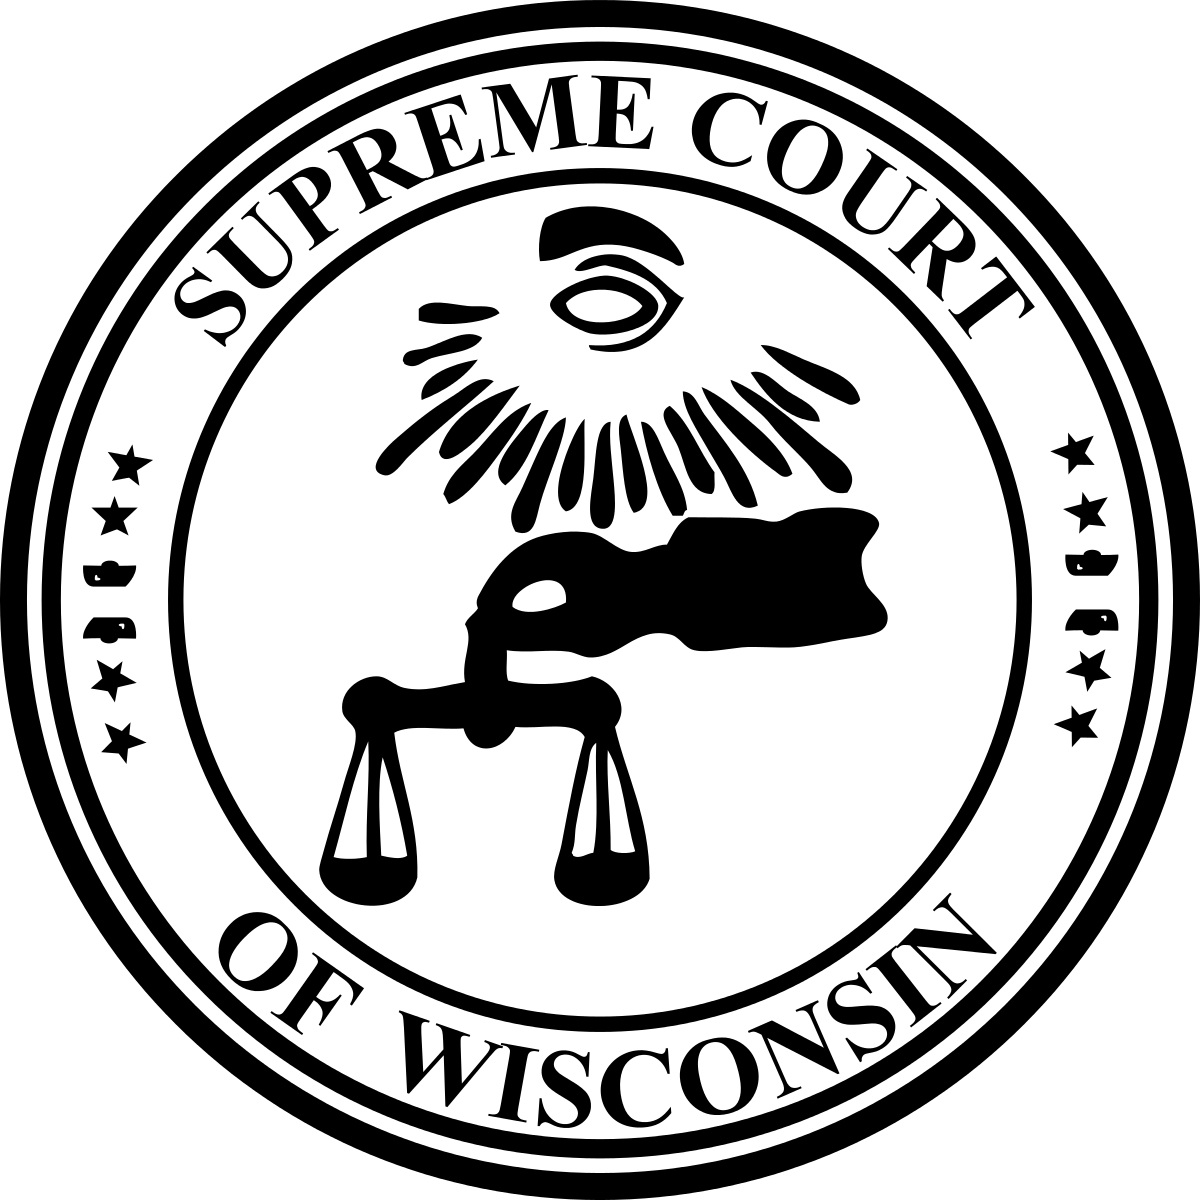 Supreme Court Logo - Wisconsin Supreme Court